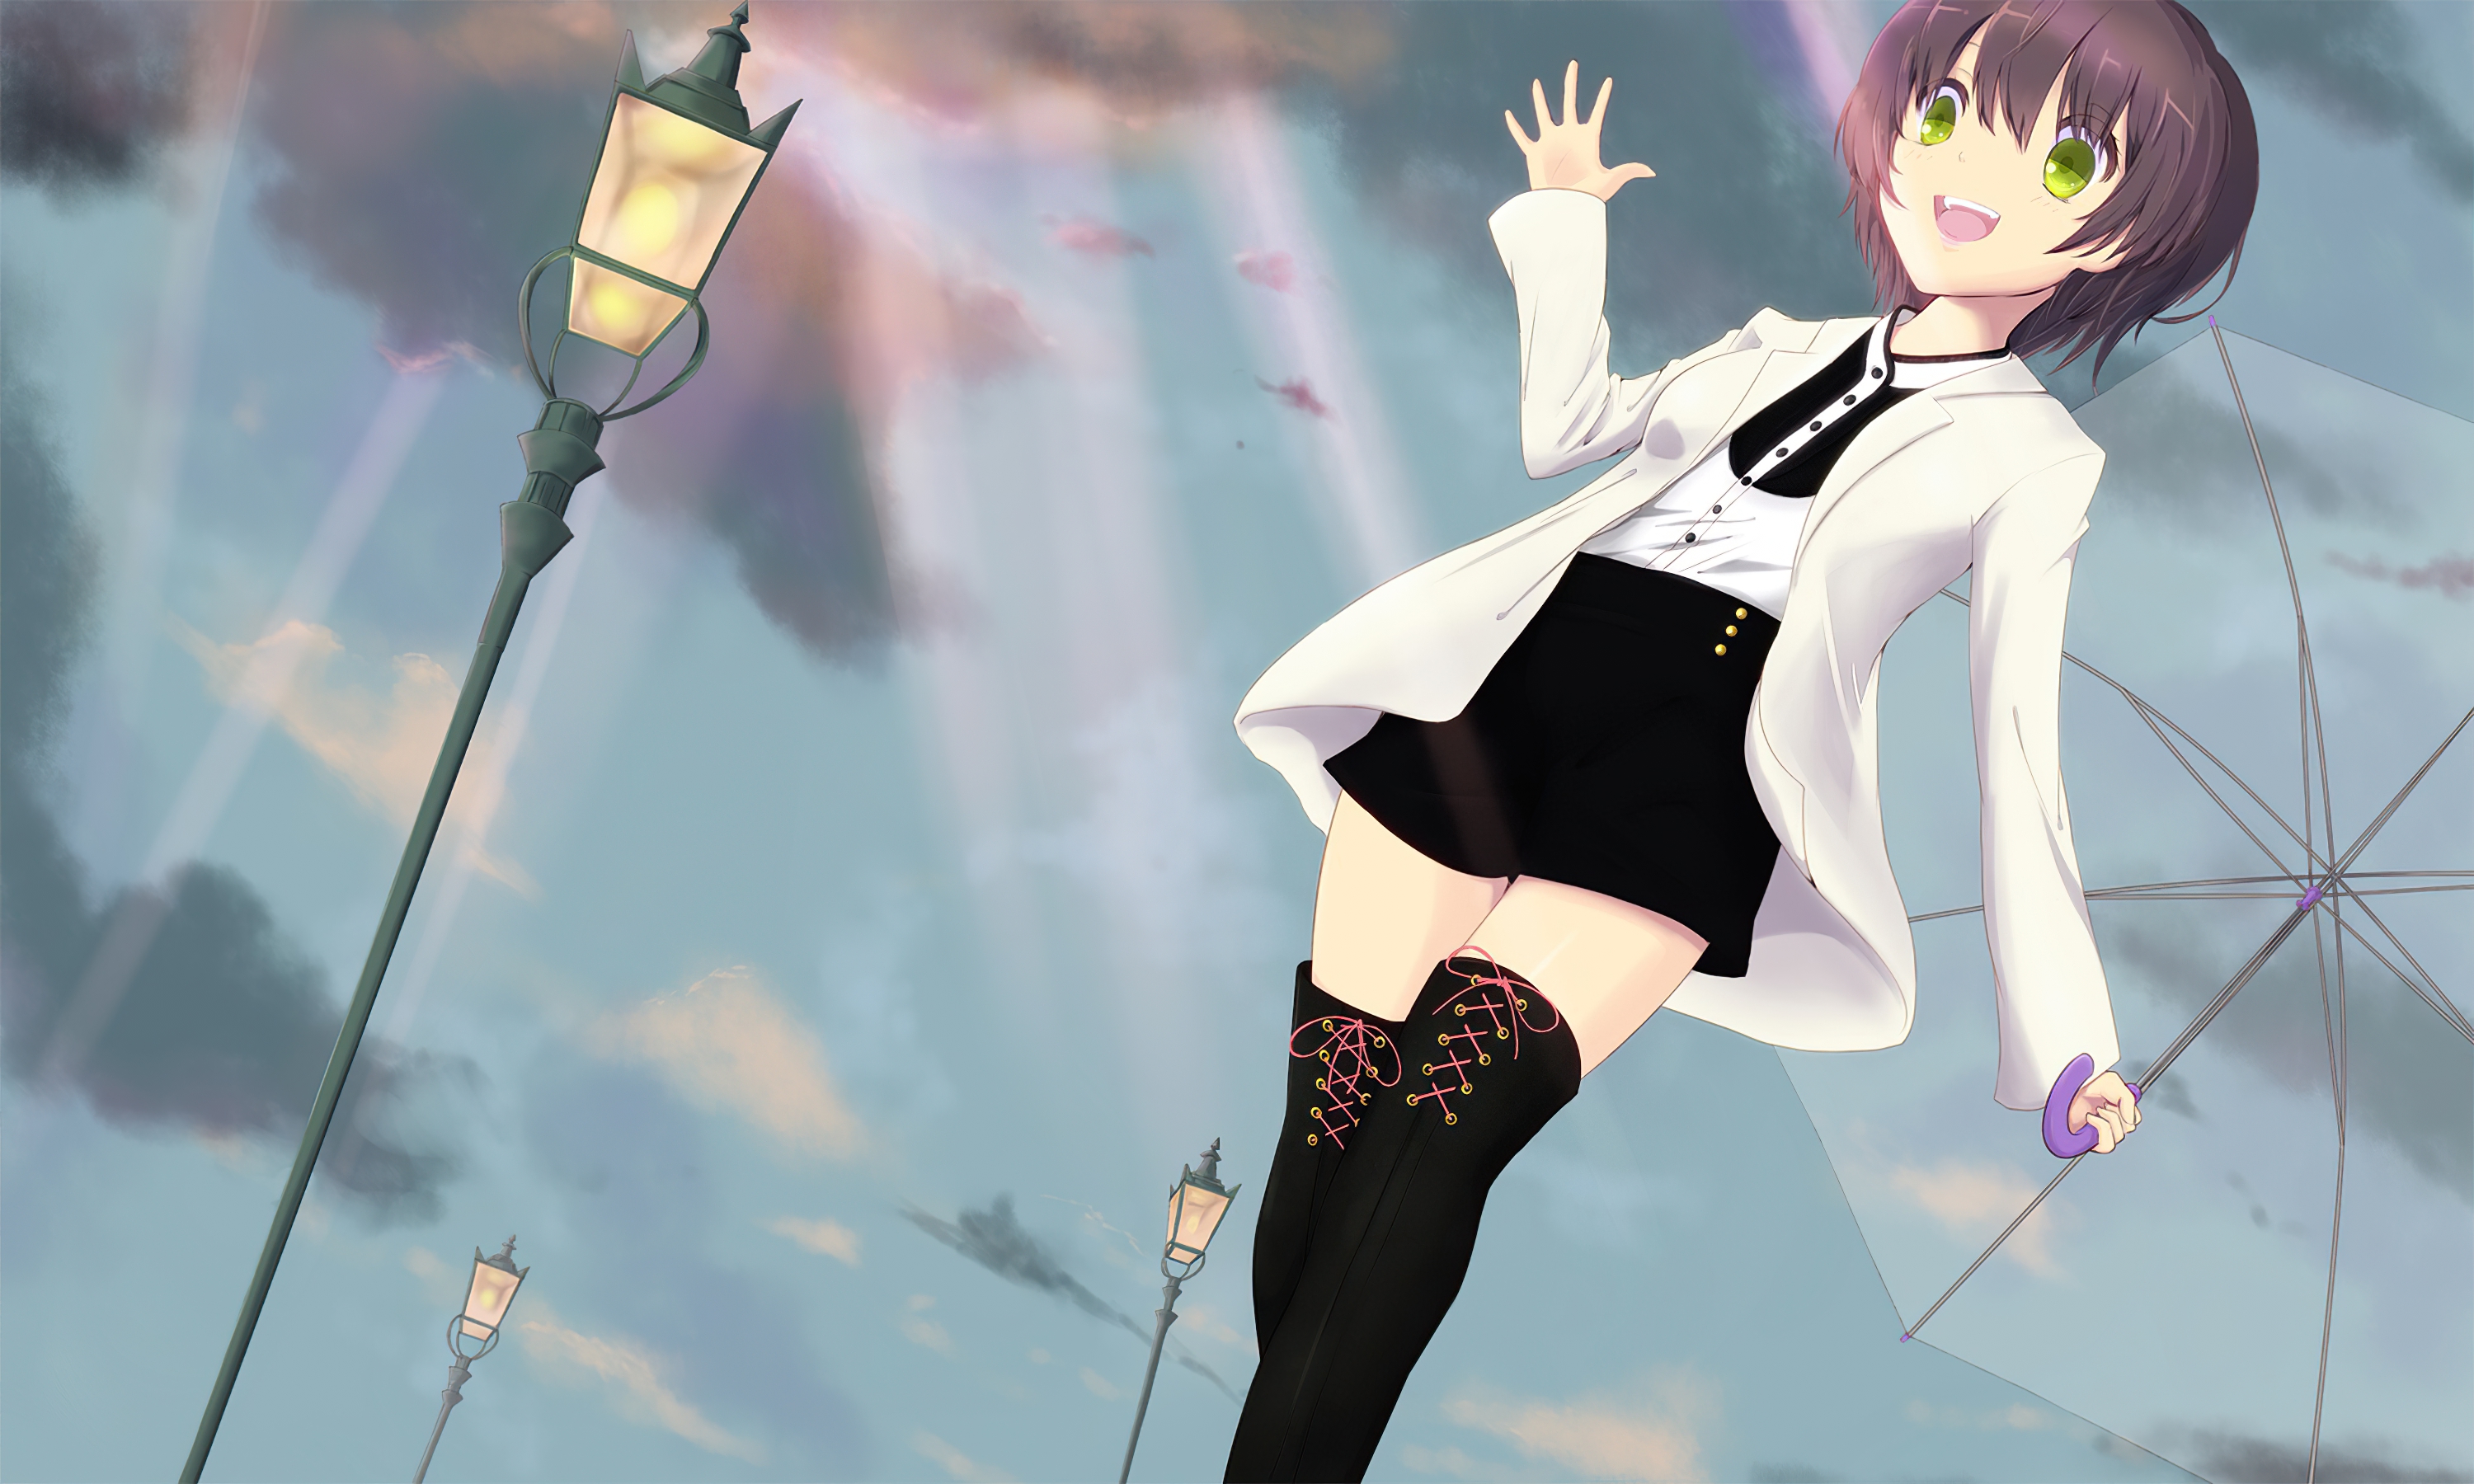 Anime Women HD Wallpaper | Background Image